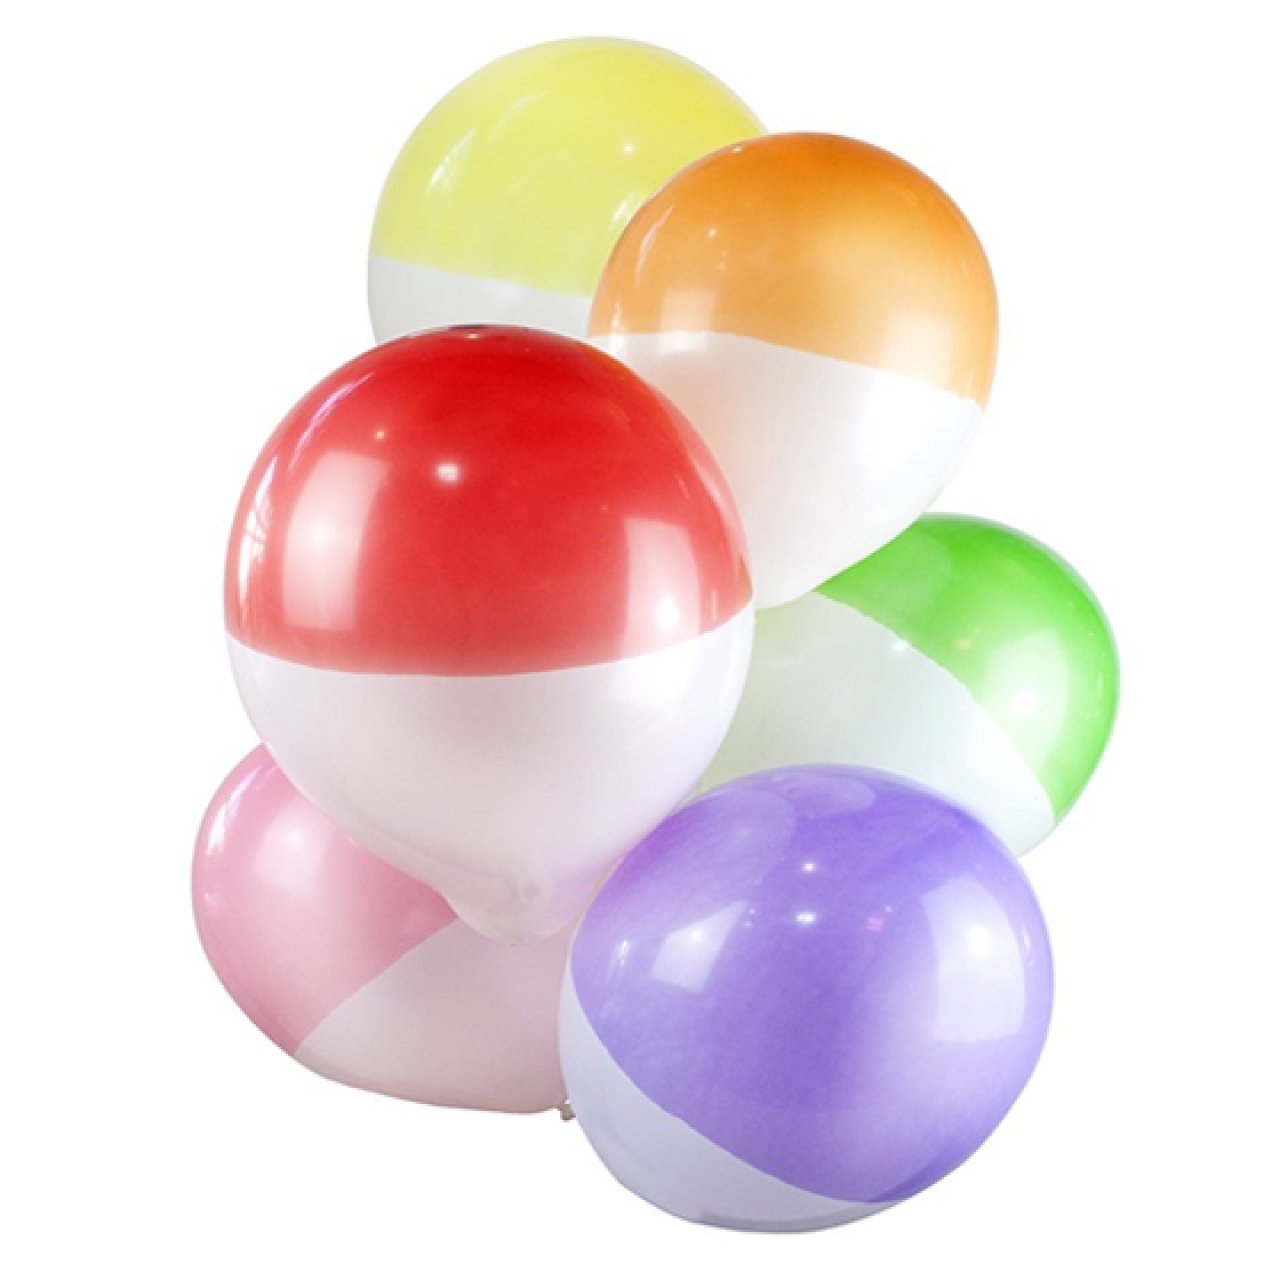 Luftballons zweifarbe